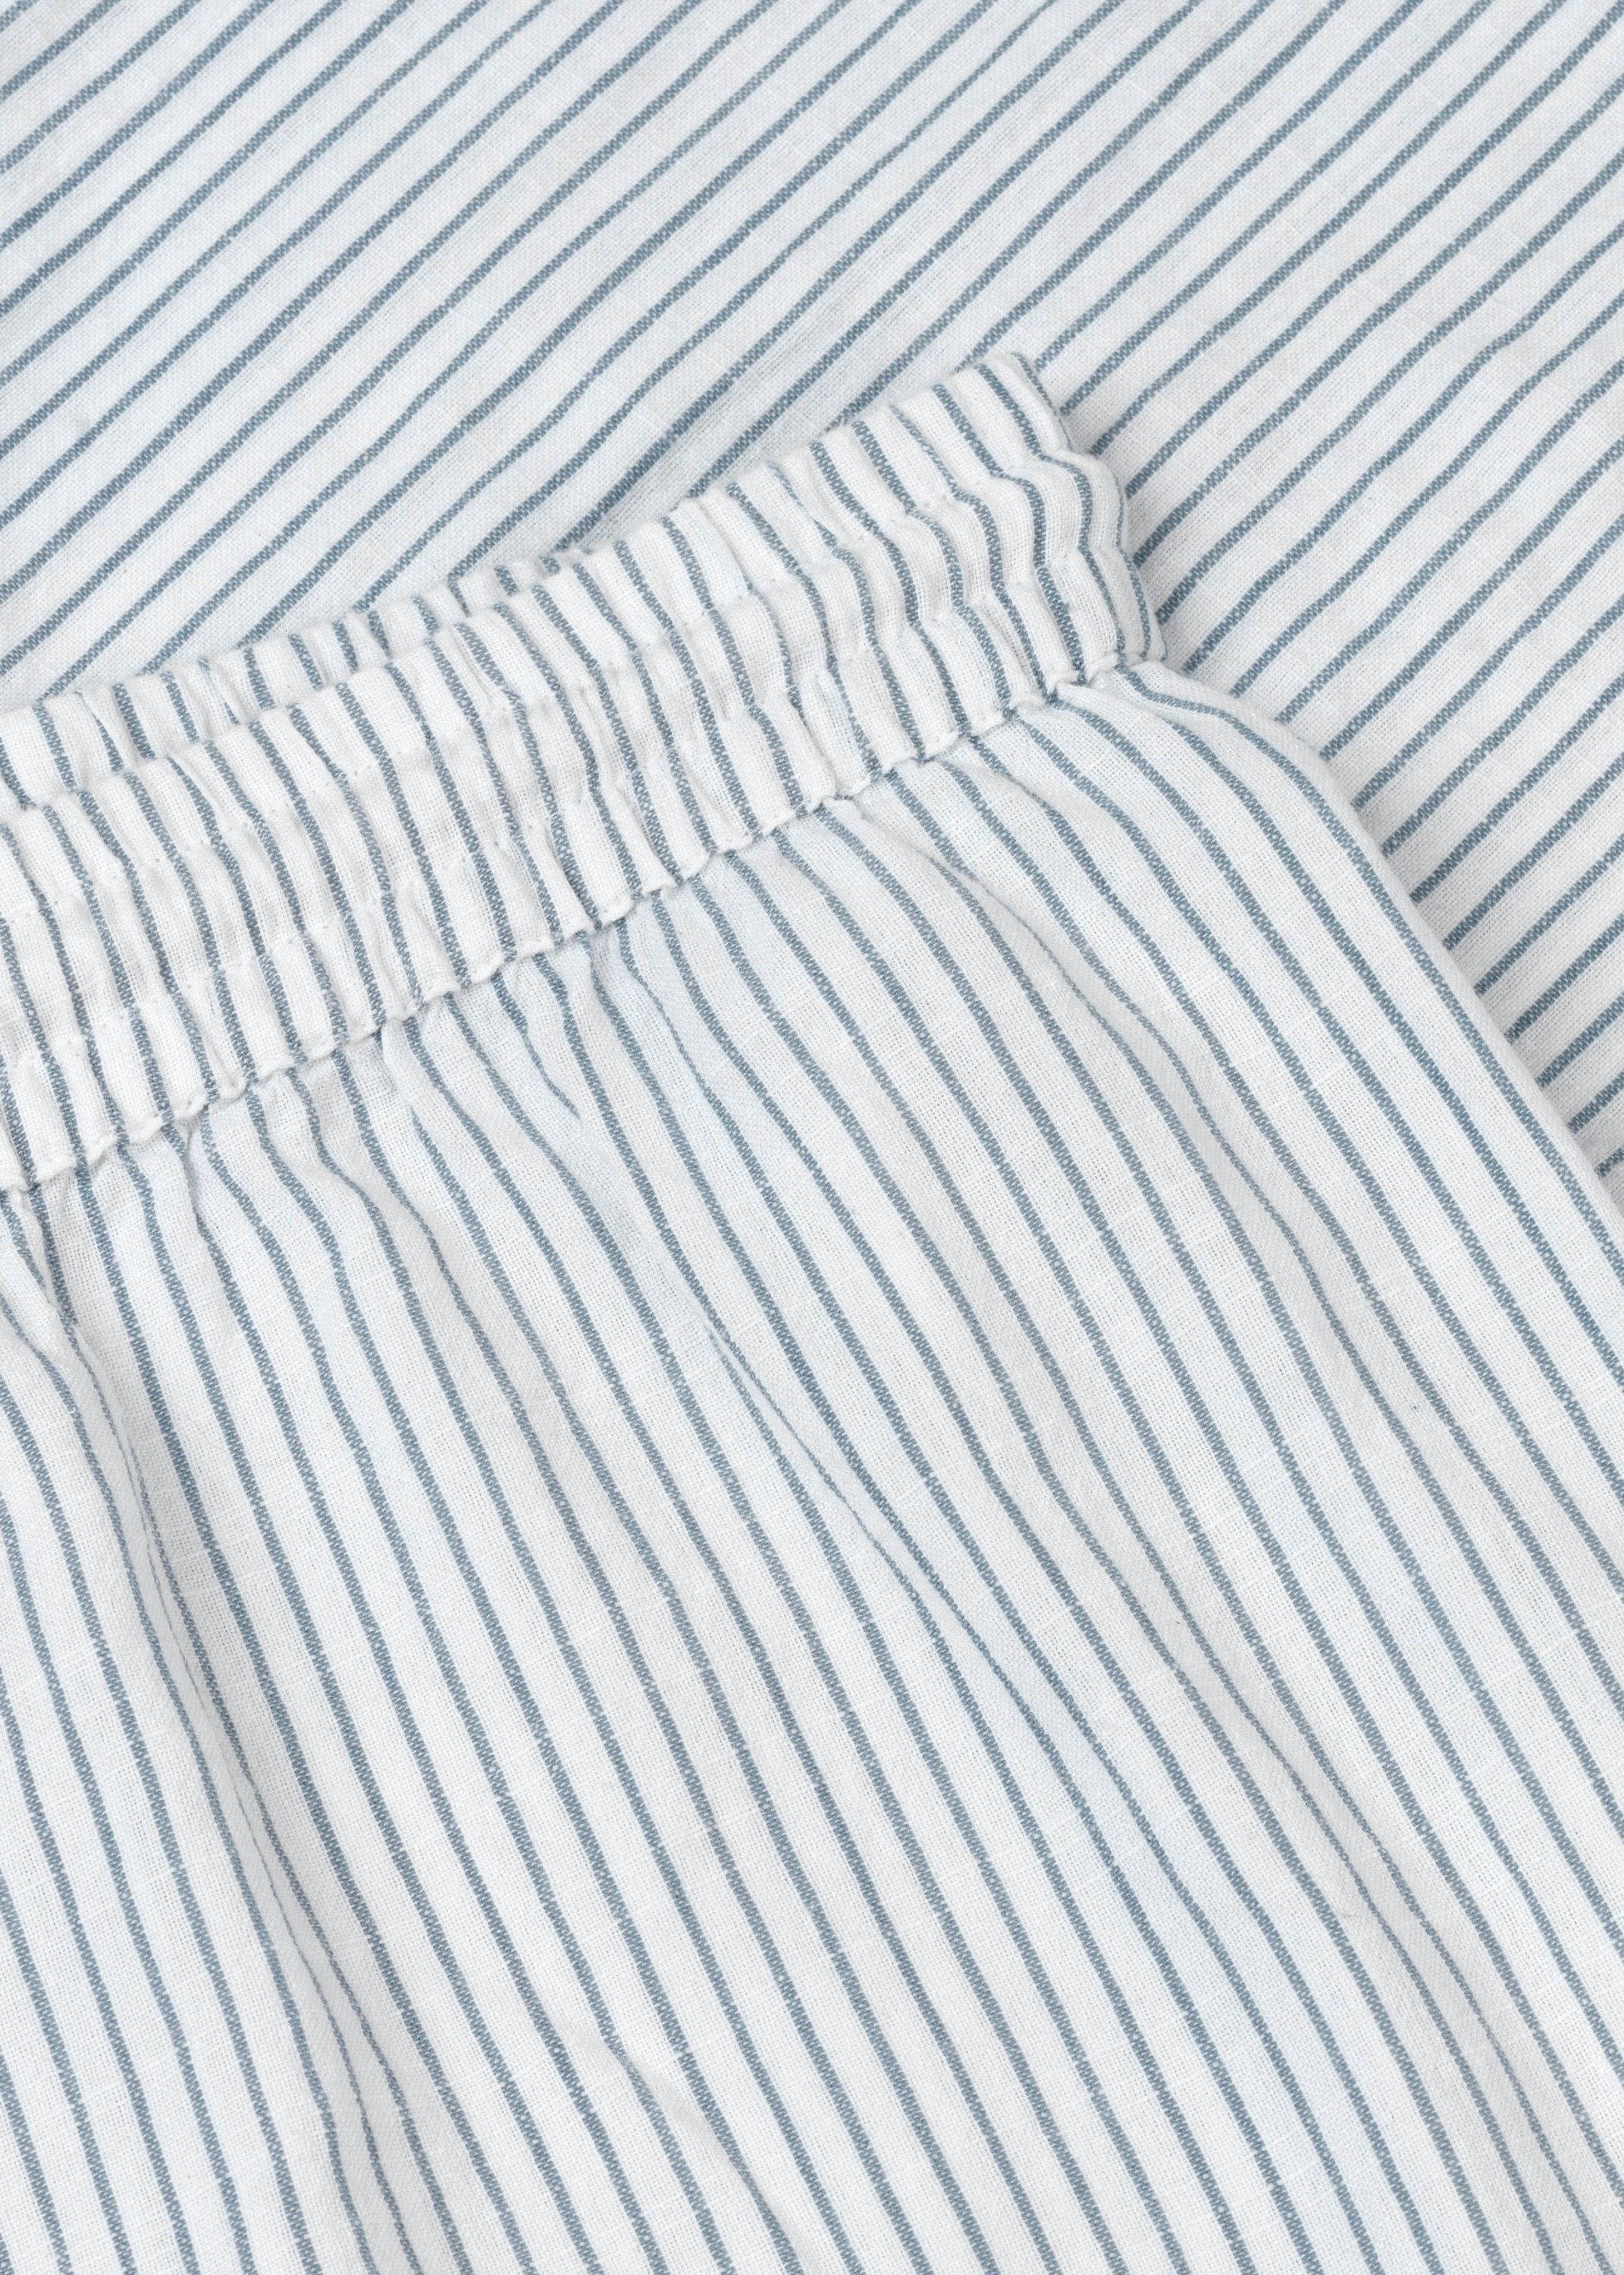 Loungewear - Lilja Pant Striped